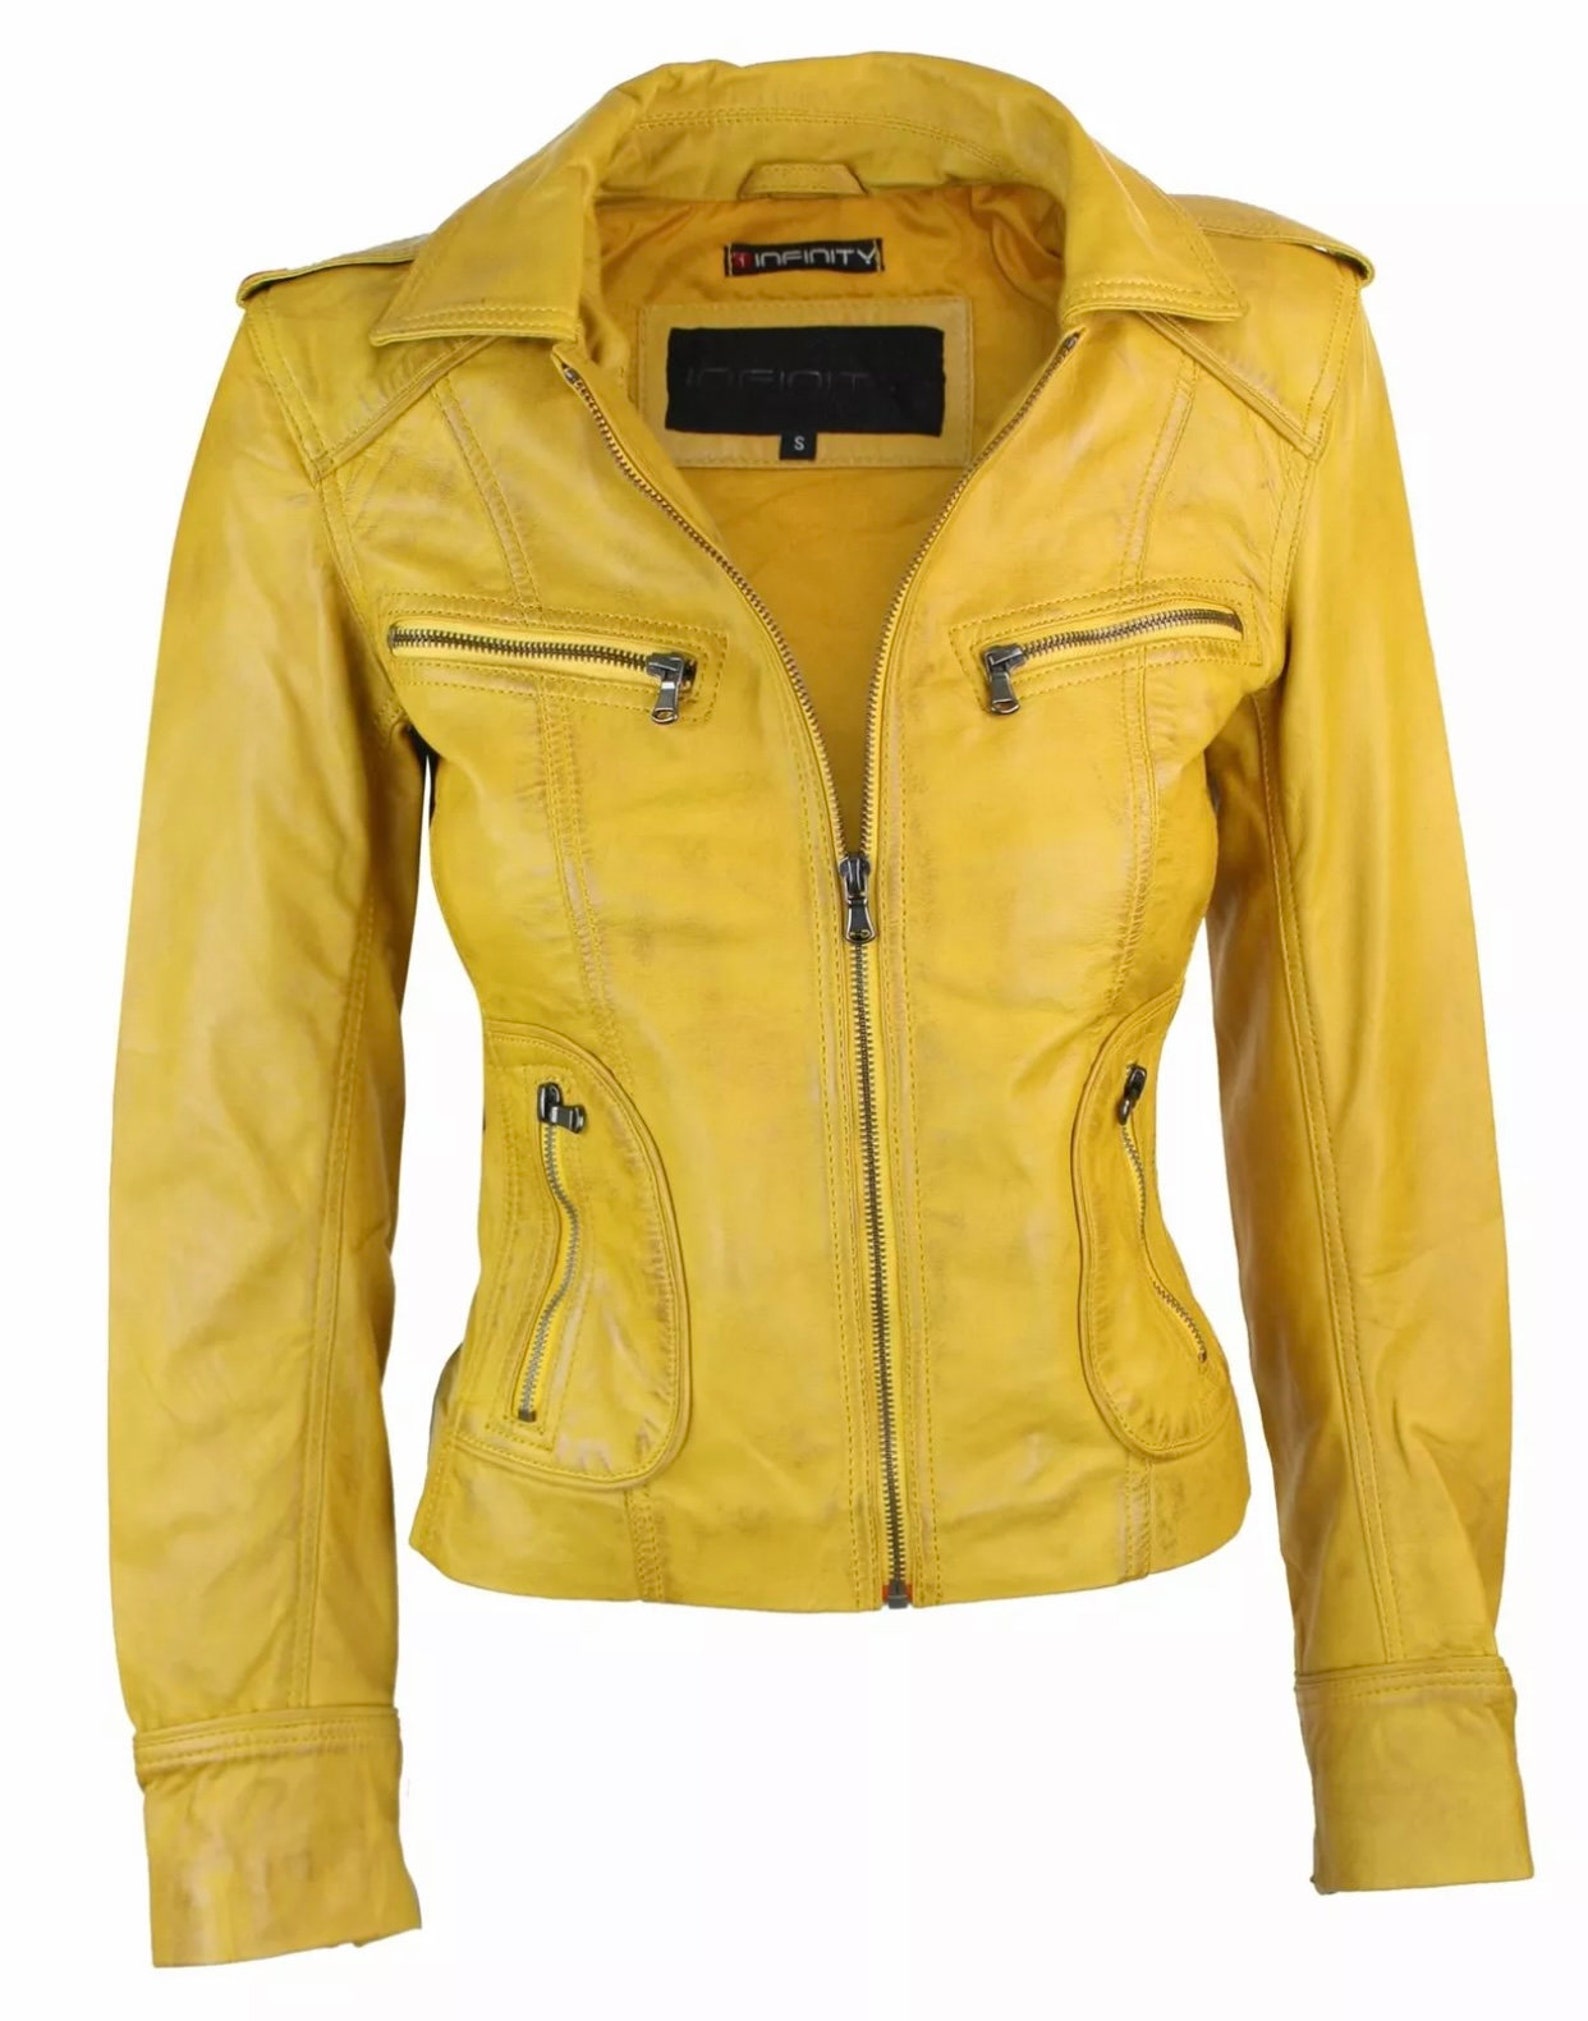 Ladies yellow and black fashion jacket women stylish slim fit | Etsy